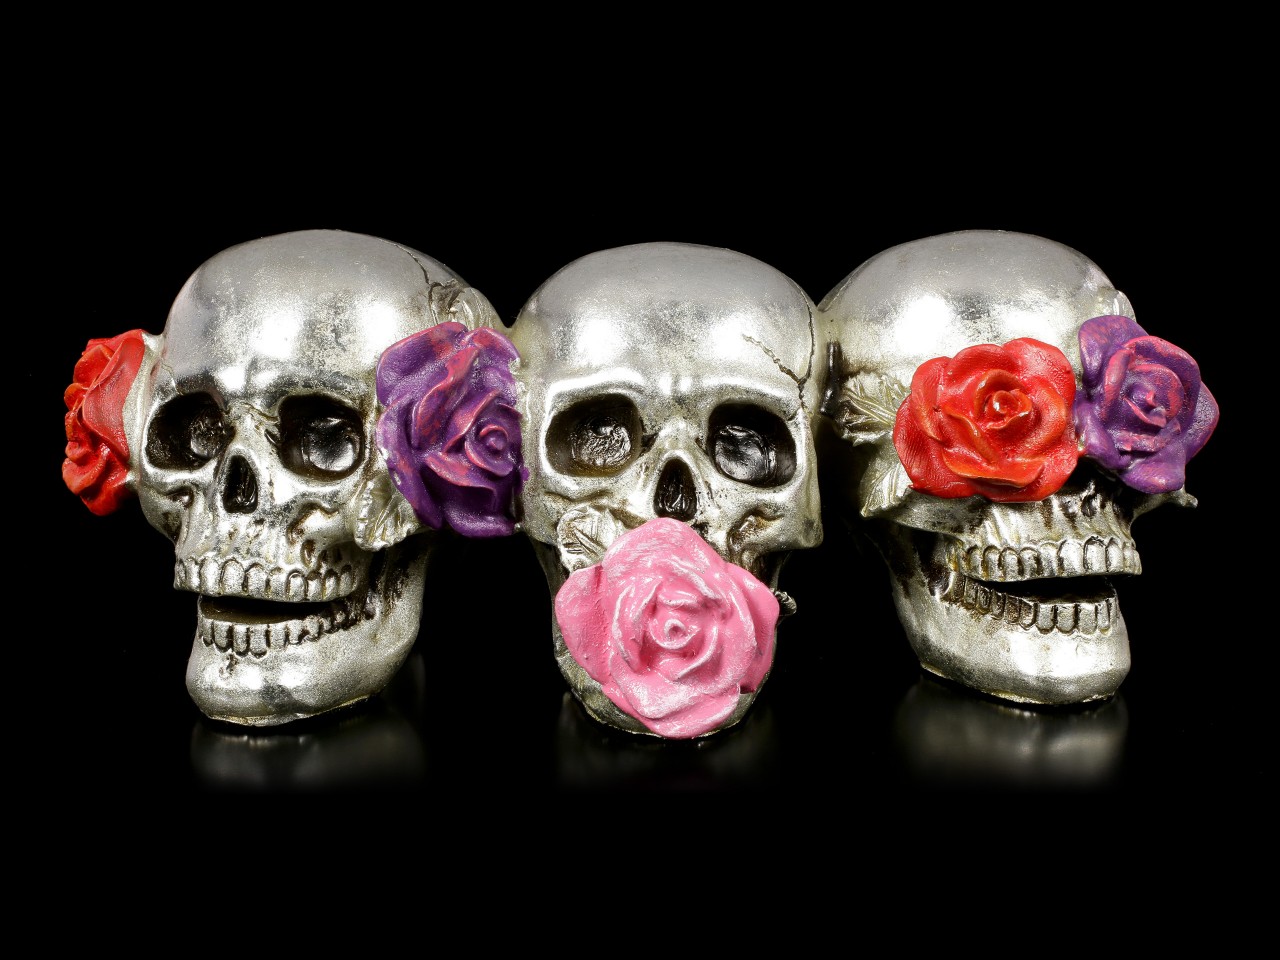 Three Skulls with Roses - No Evil